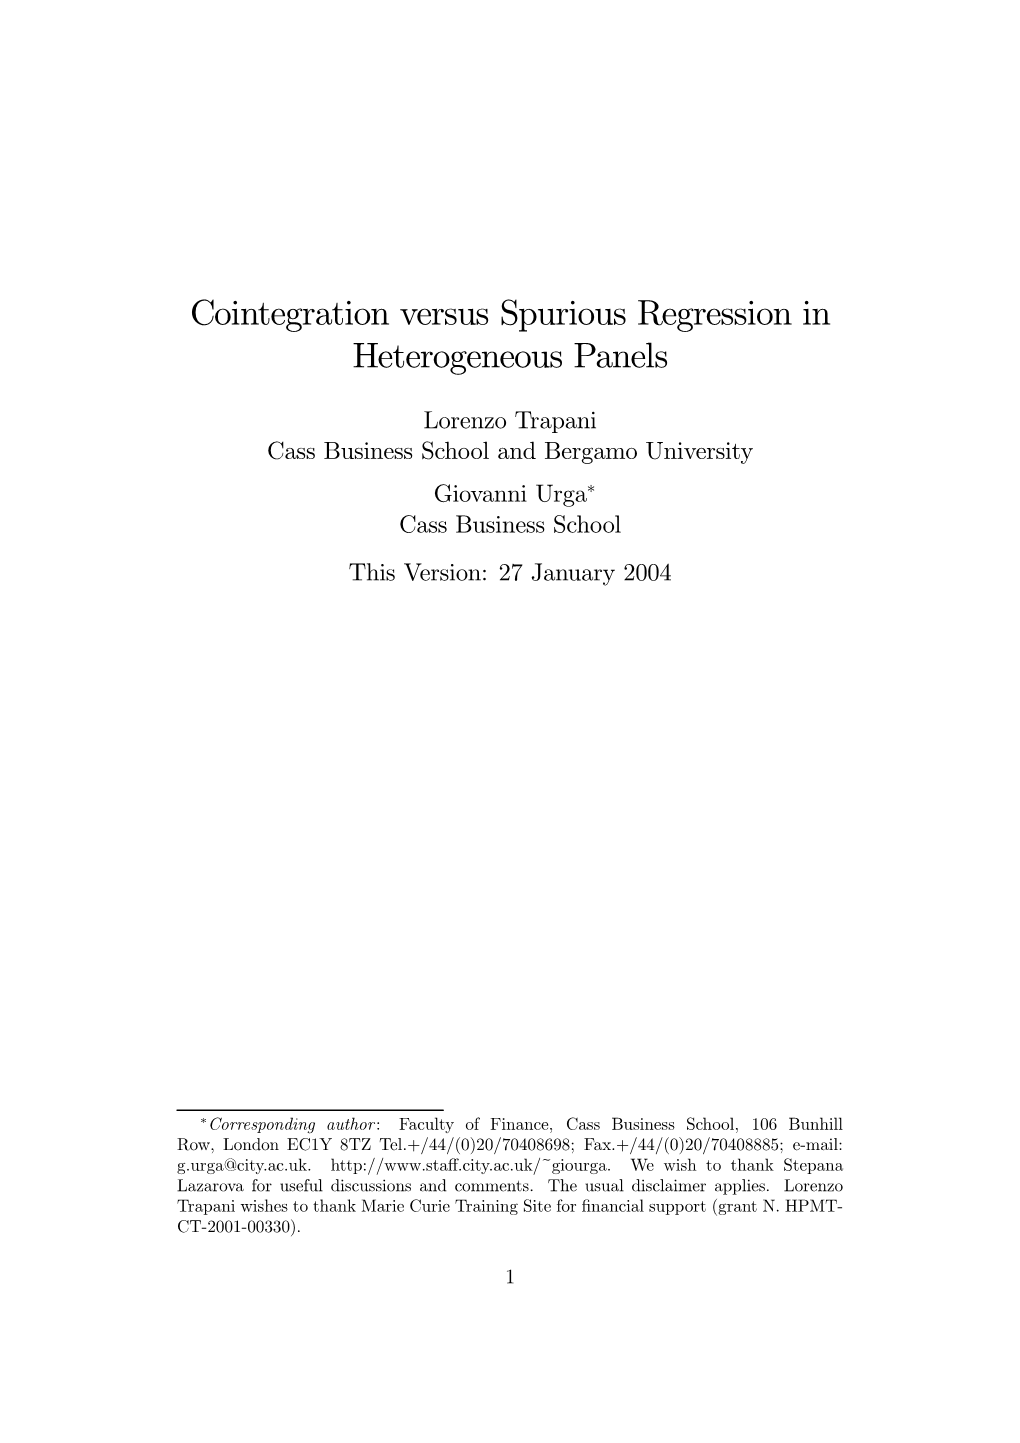 Cointegration Versus Spurious Regression in Heterogeneous Panels